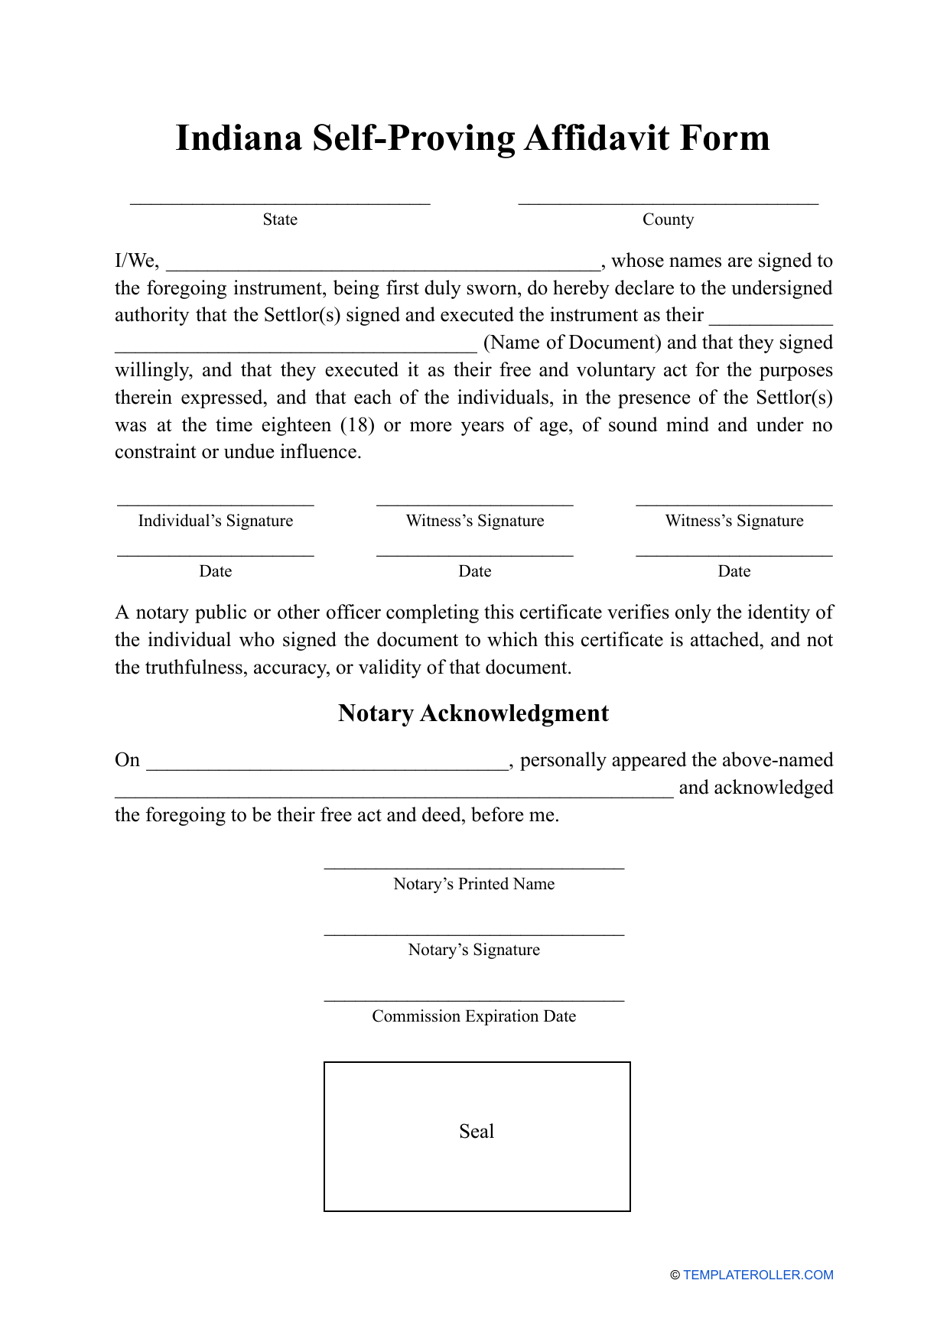 Self-proving Affidavit Form - Indiana, Page 1